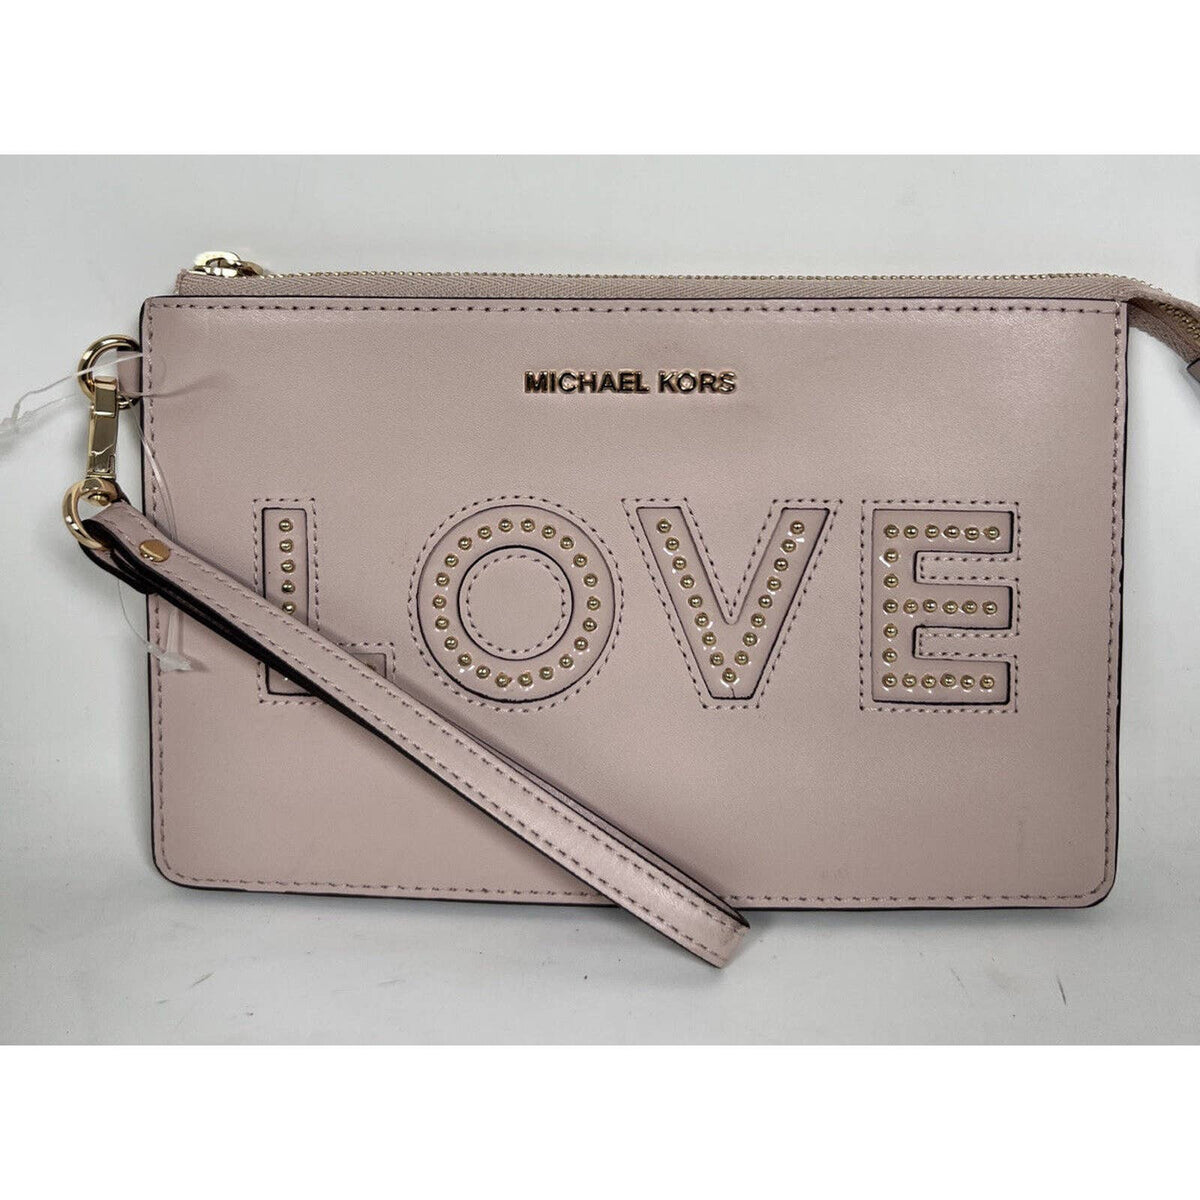 Michael Kors ‘Love’ Pink Wristlet NEW